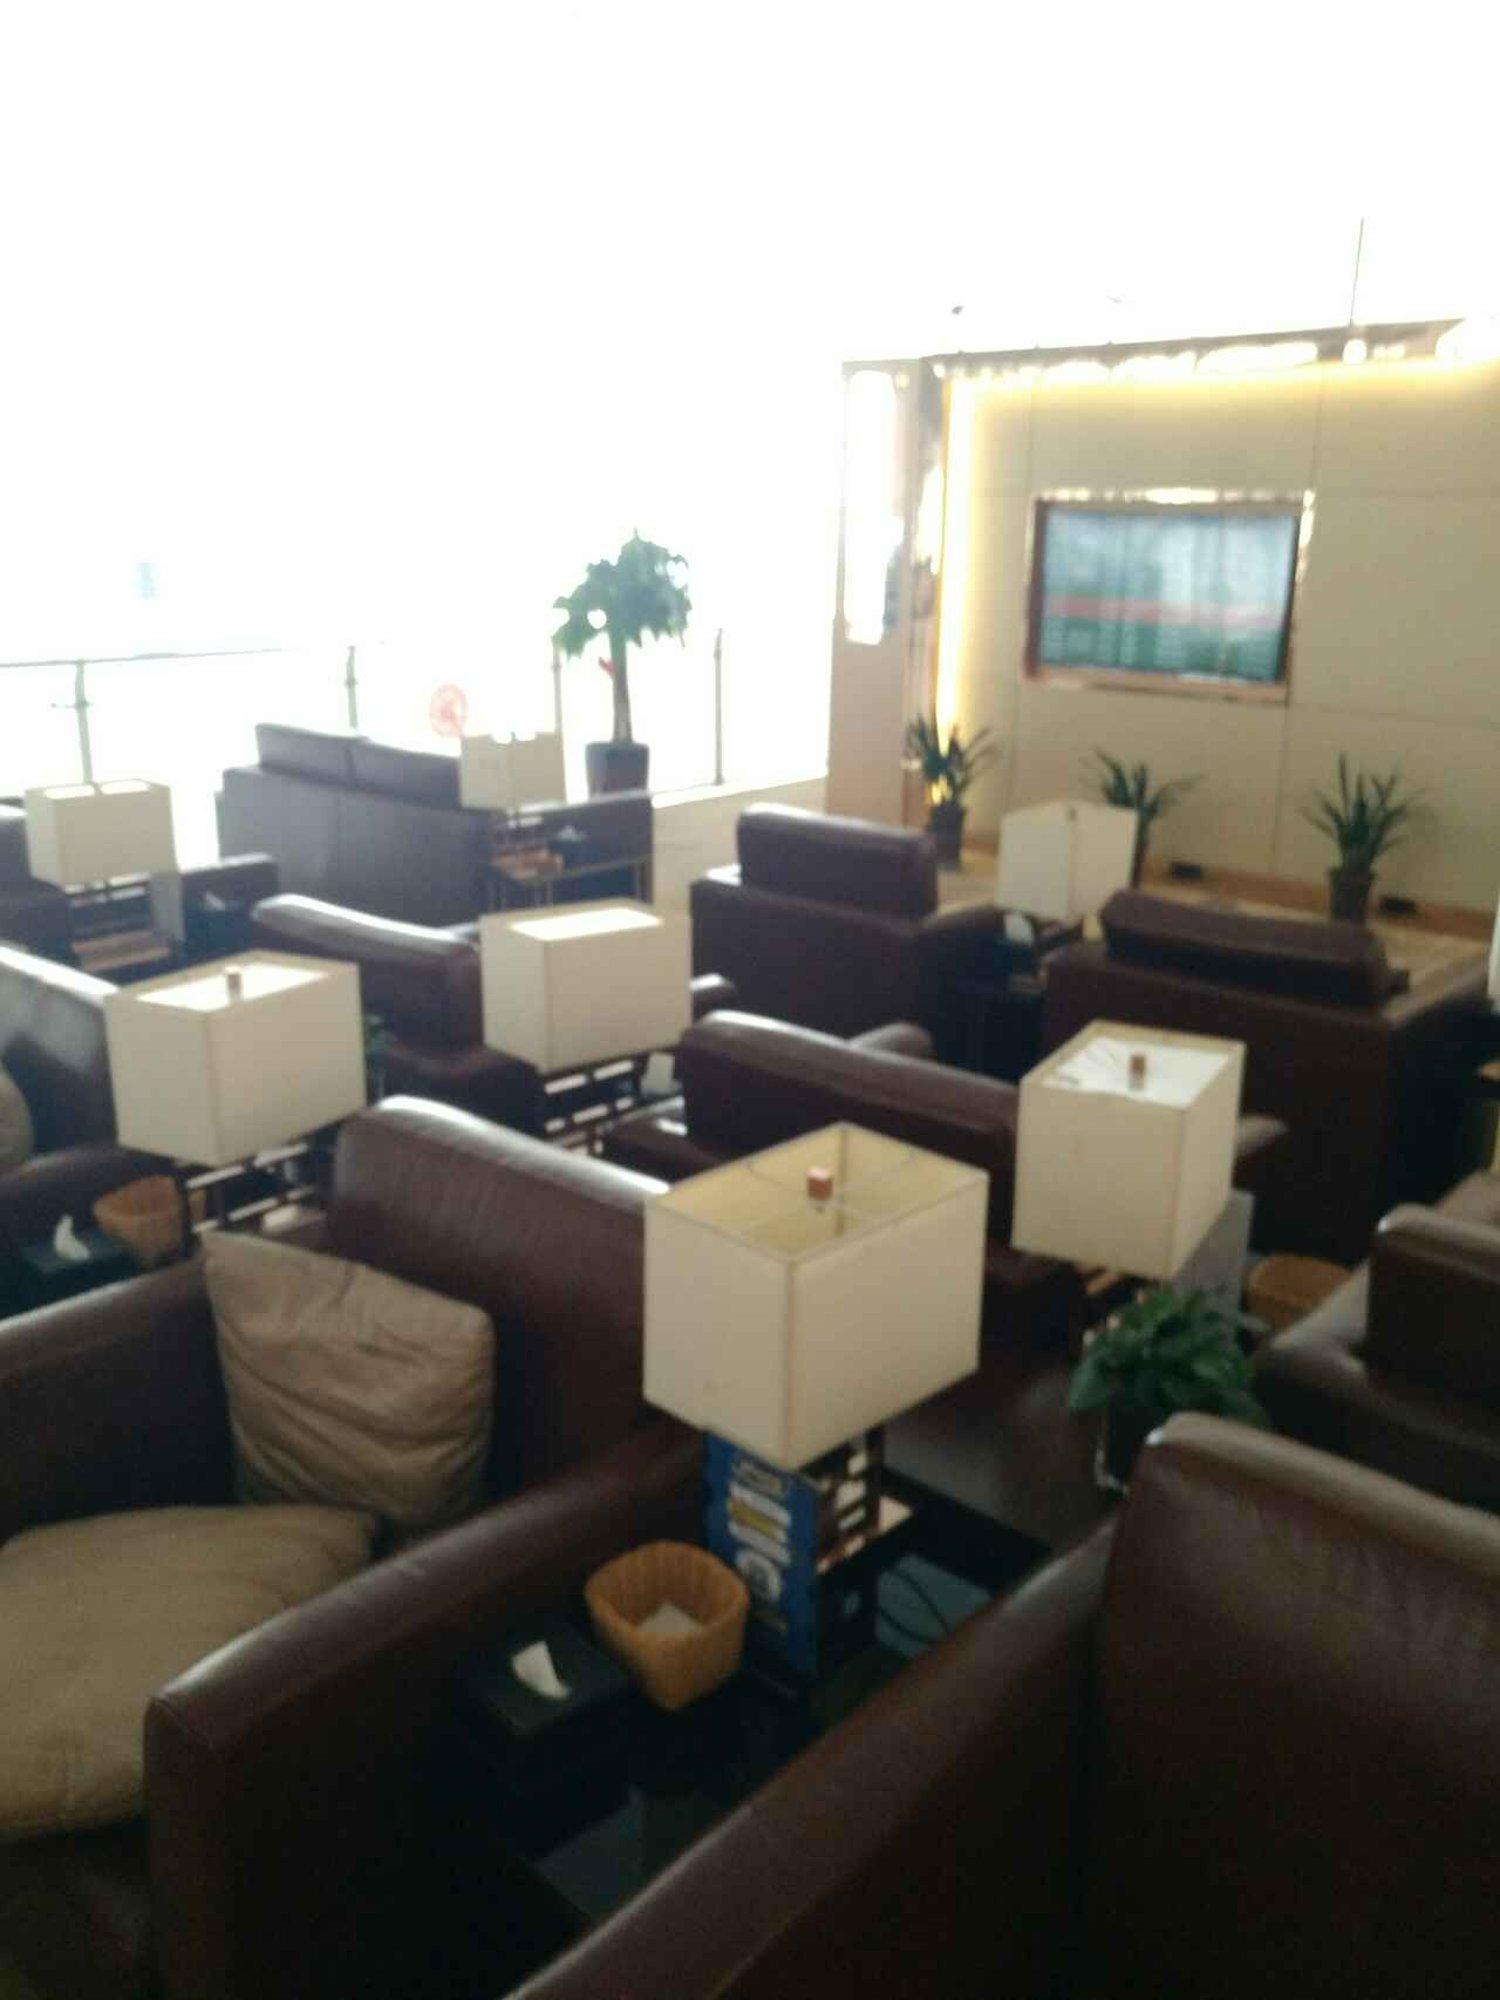 V2 Shenzhen Airlines King Lounge image 3 of 4